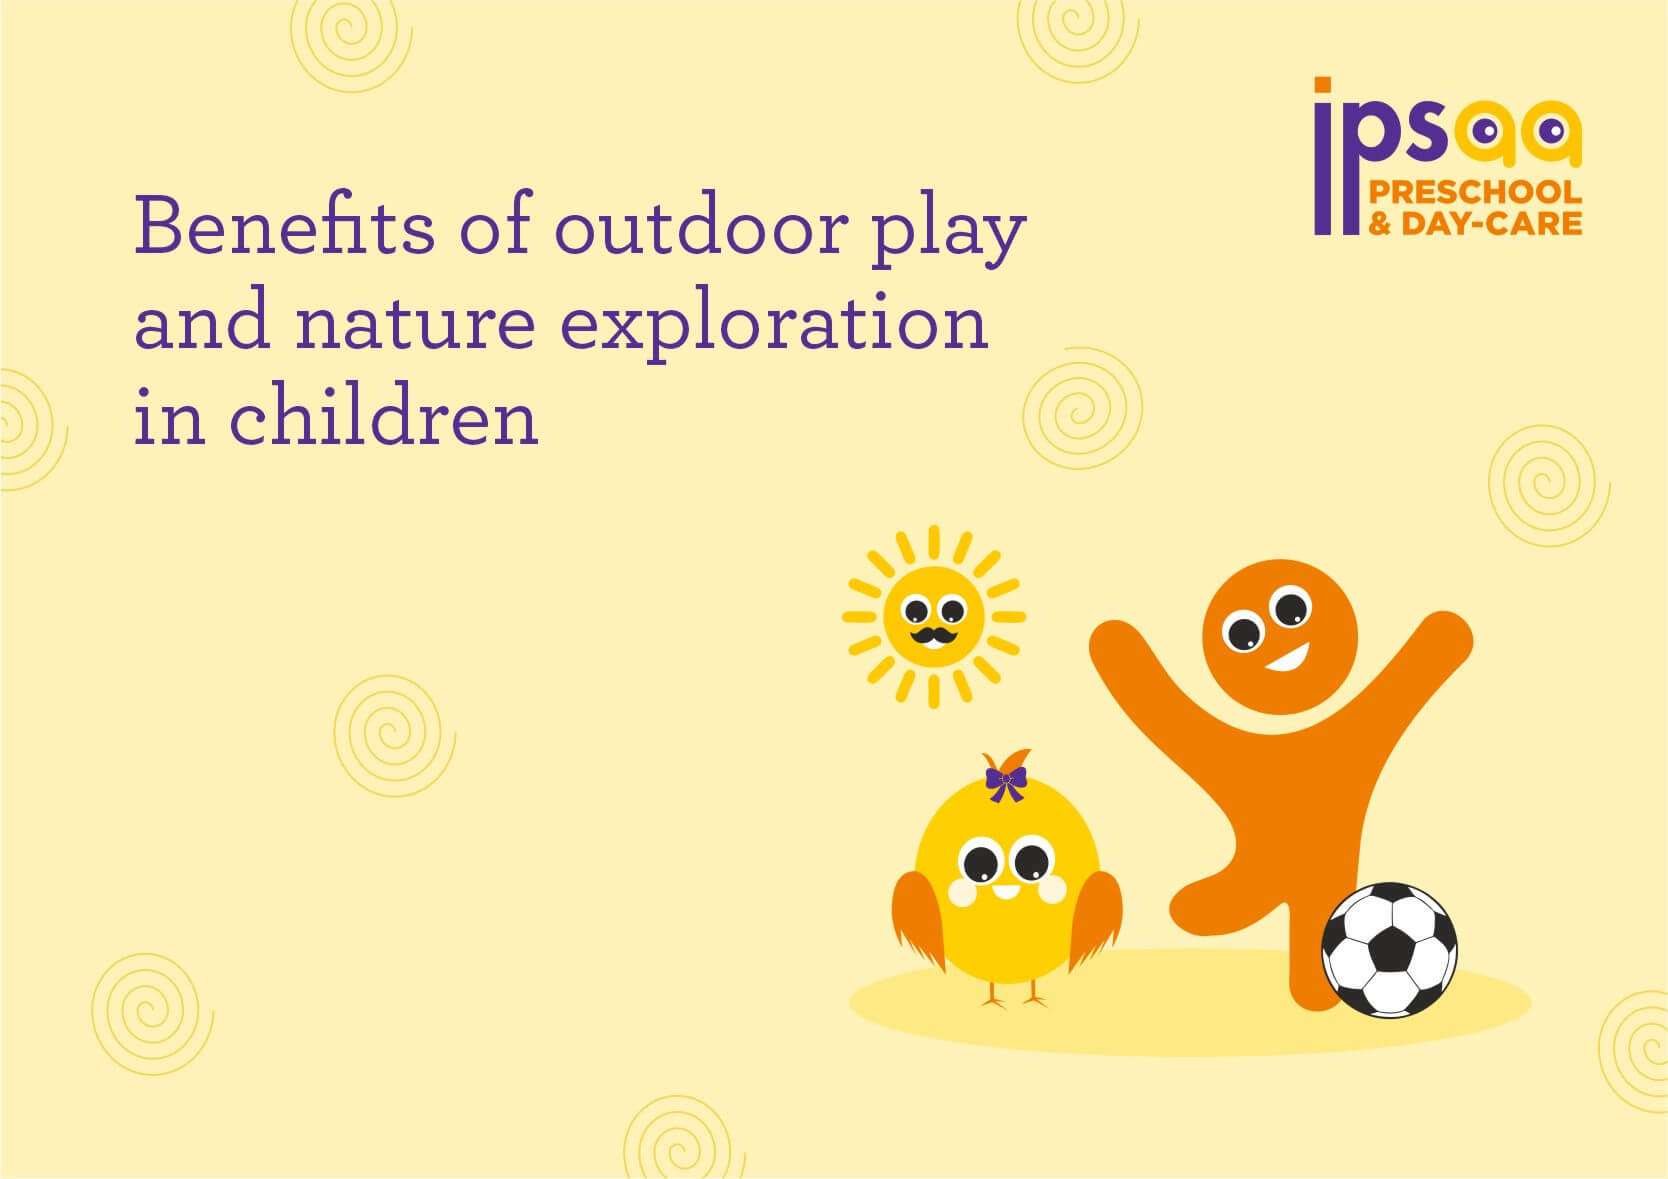 Benefits of outdoor play and nature exploration in school children